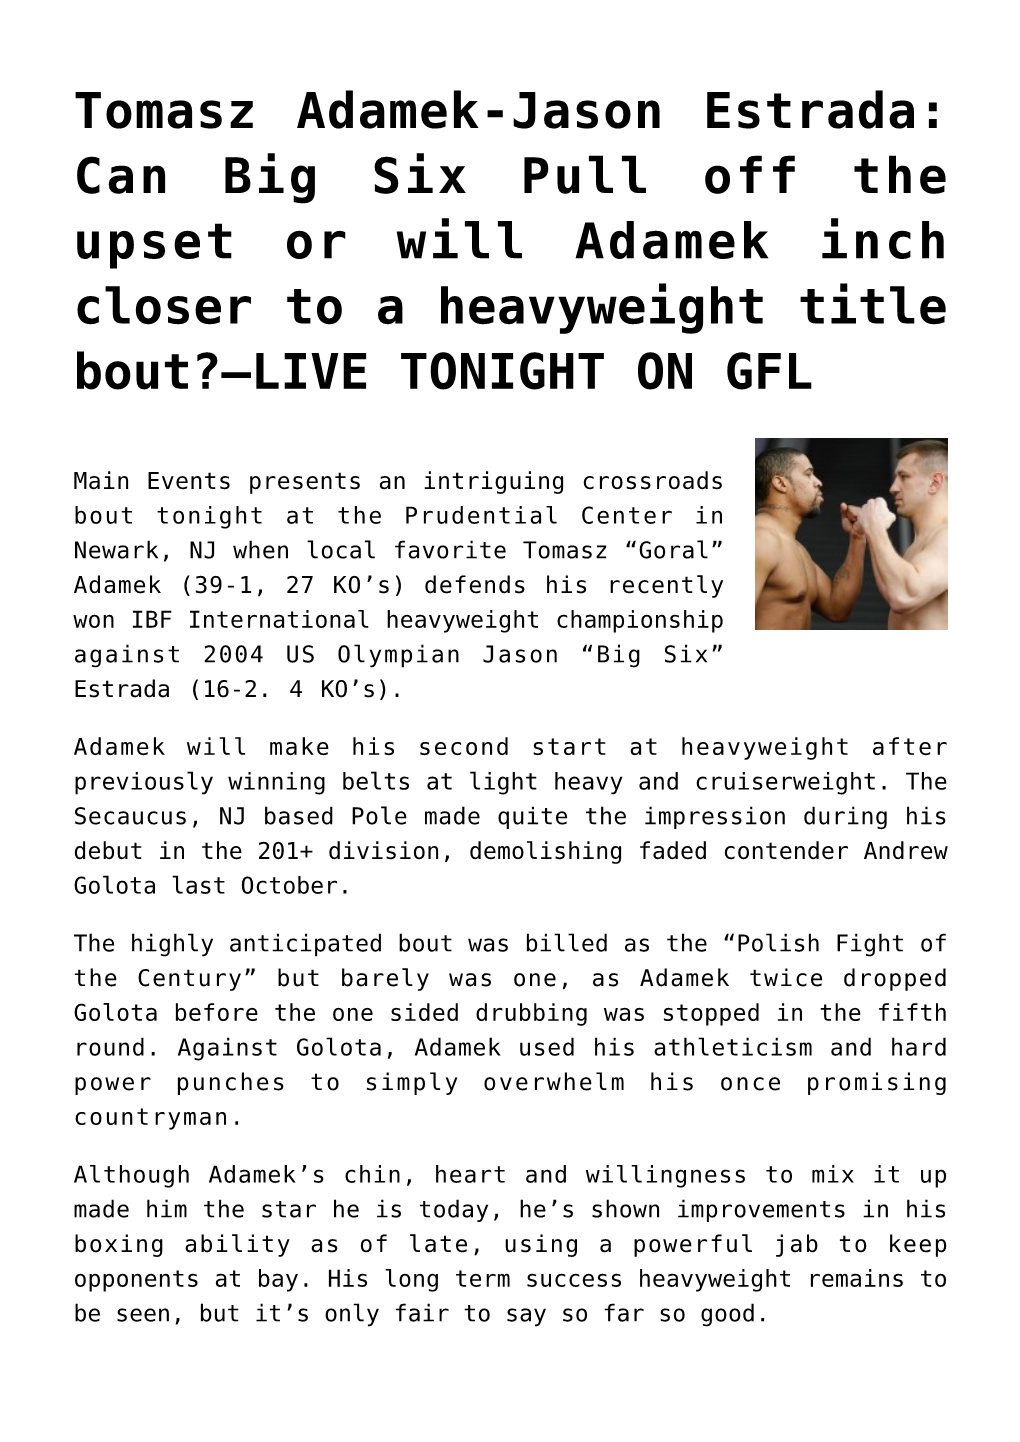 Tomasz Adamek-Jason Estrada: Can Big Six Pull Off the Upset Or Will Adamek Inch Closer to a Heavyweight Title Bout?–LIVE TONIGHT on GFL